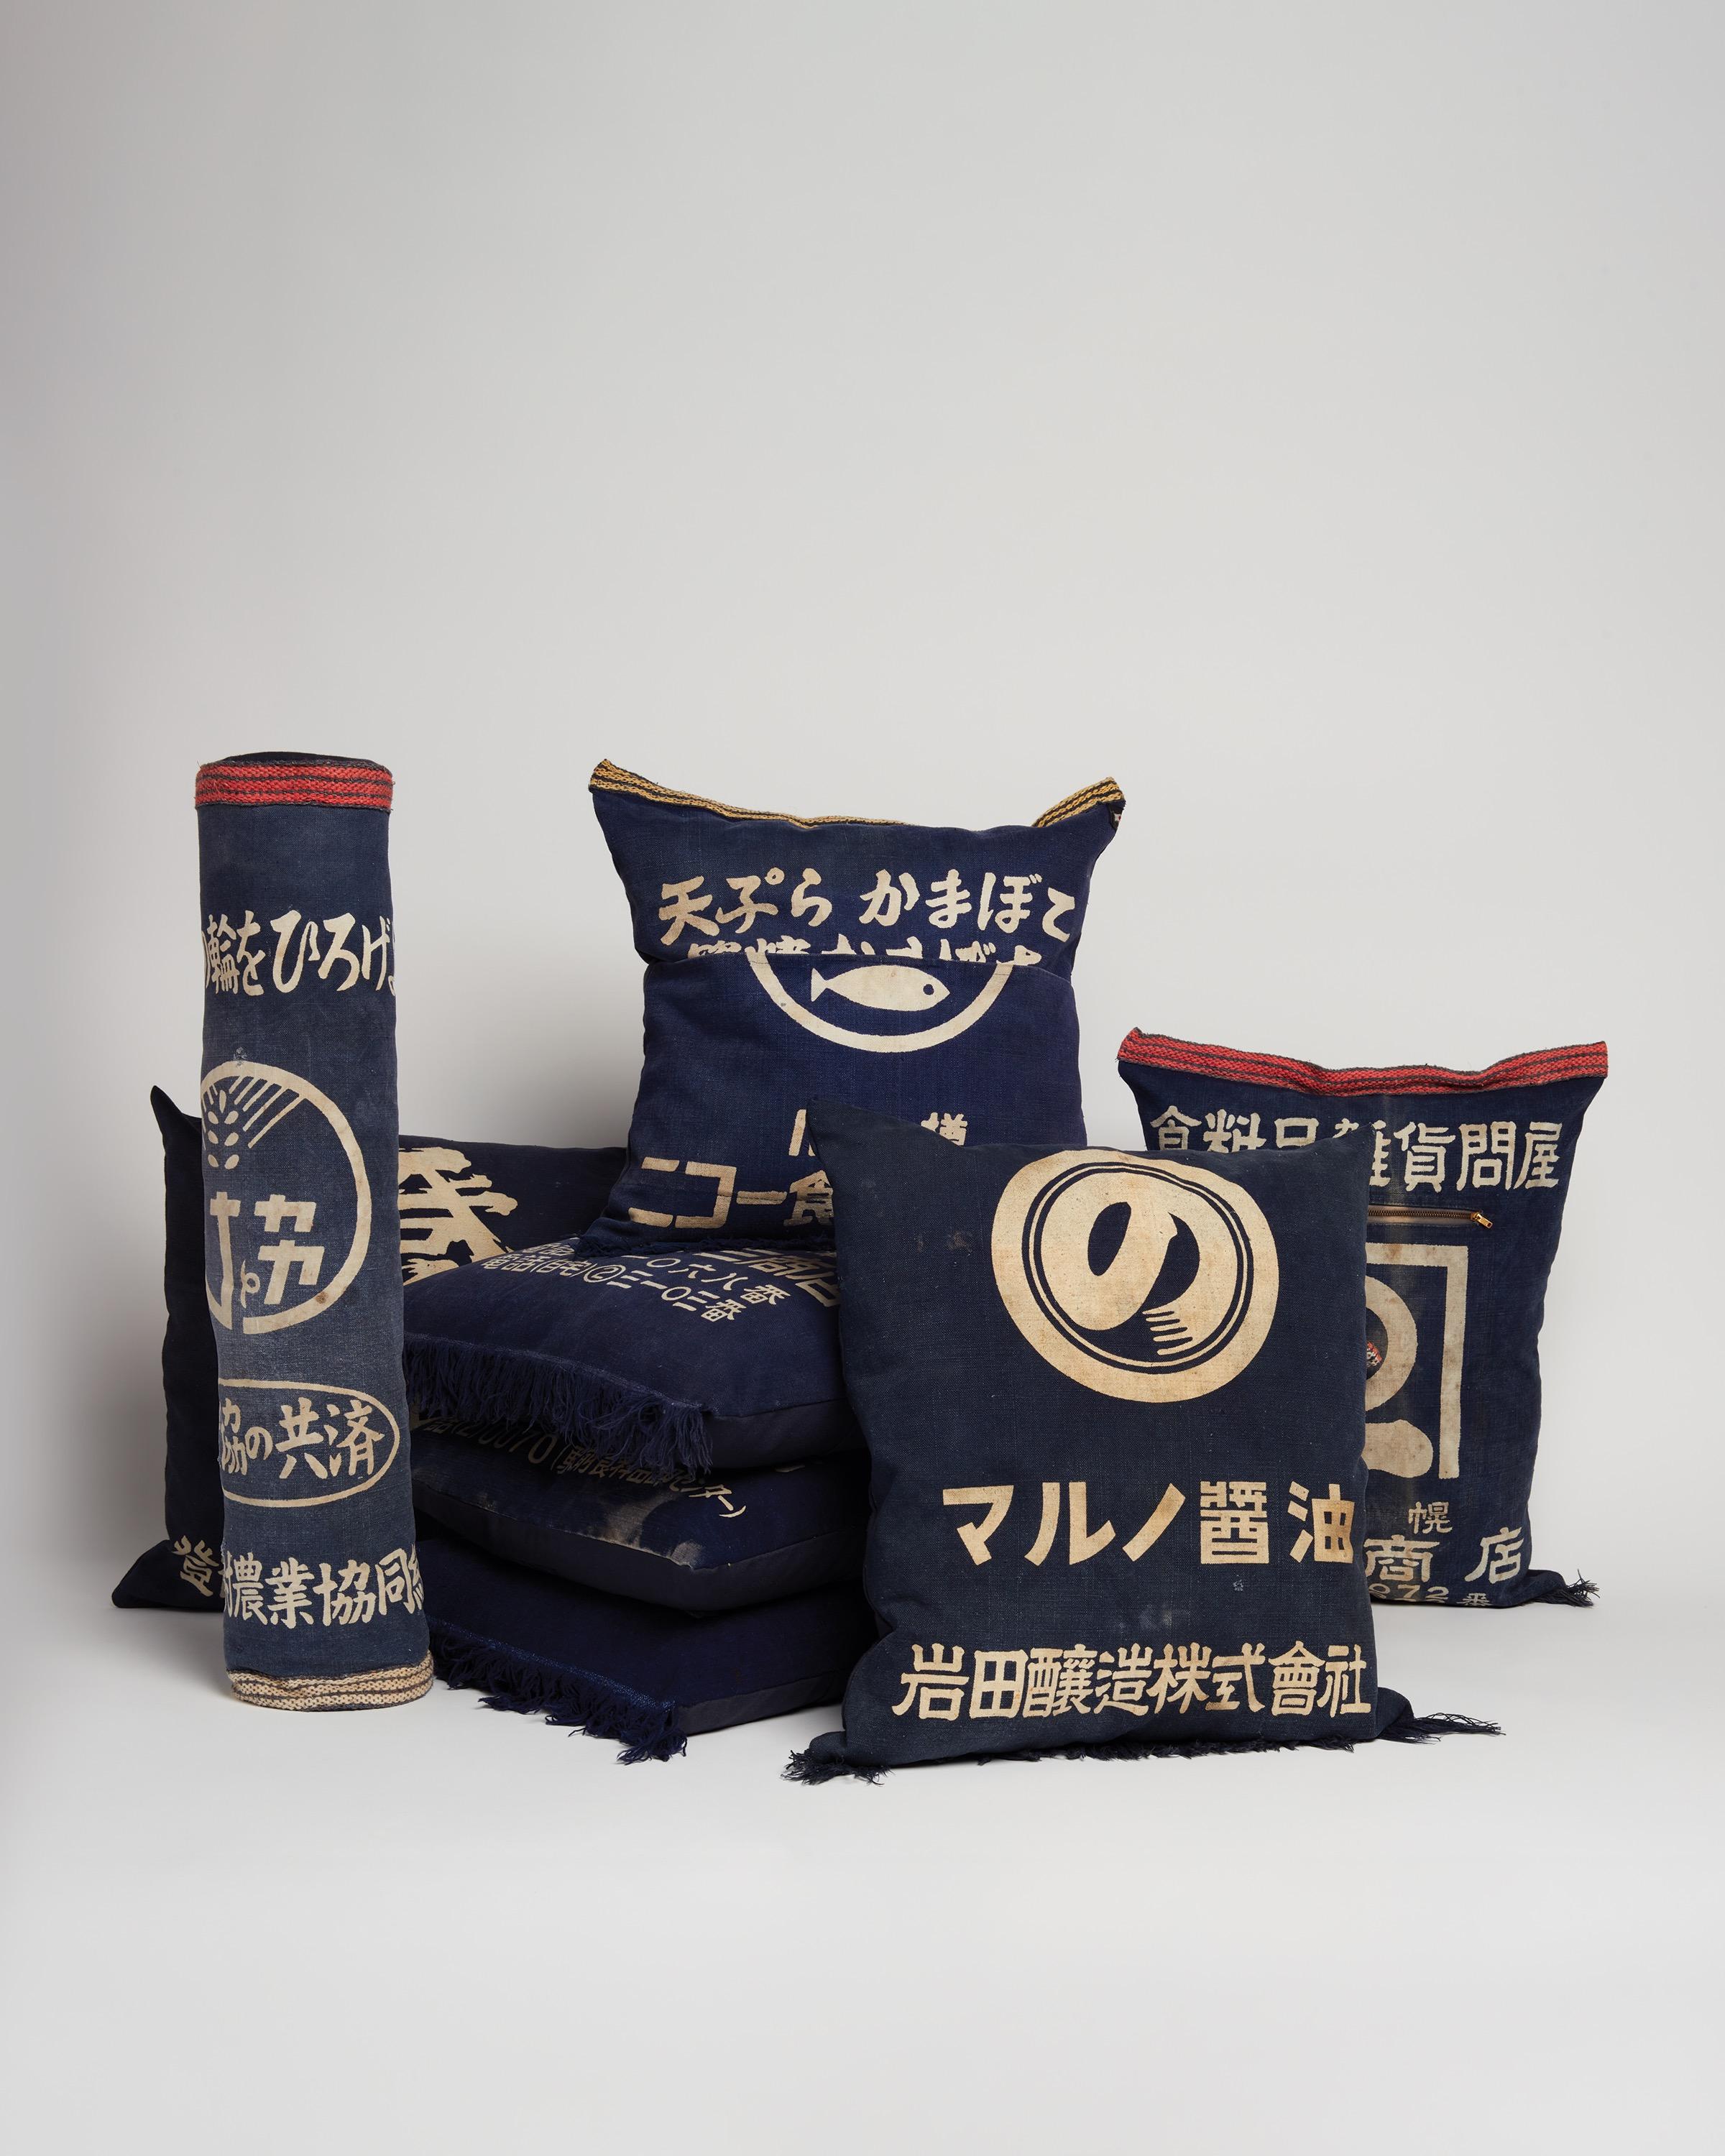 Contemporary Apron Floor/Meditation Pillow 'Maekake Japanese Aprons', 